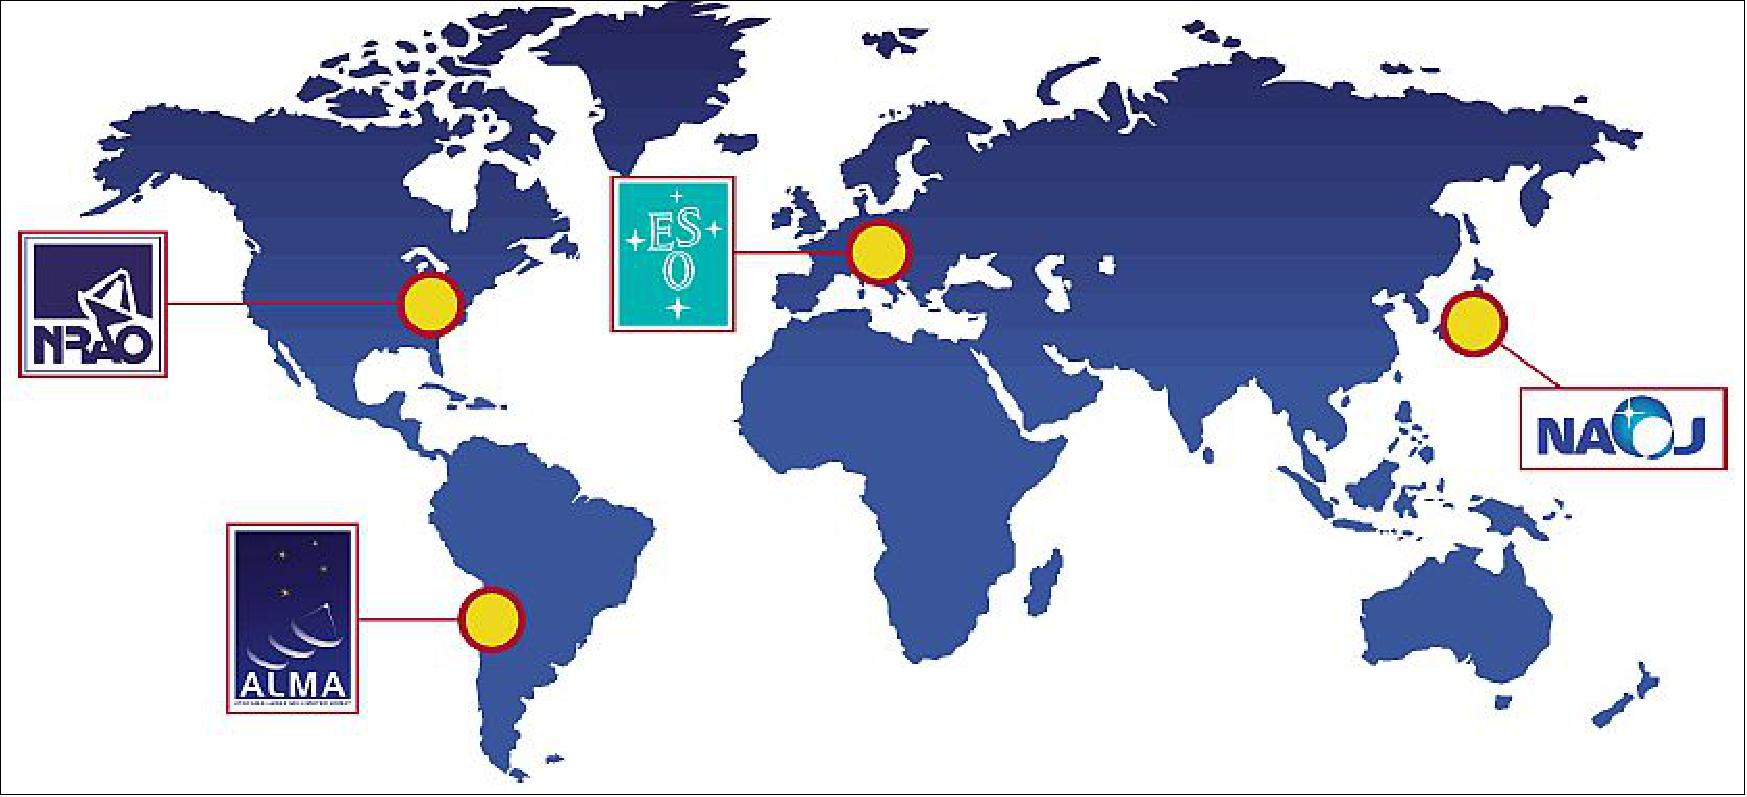 Figure 1: Global partnerships of the ALMA Program (image credit: ALMA partnership) 3)